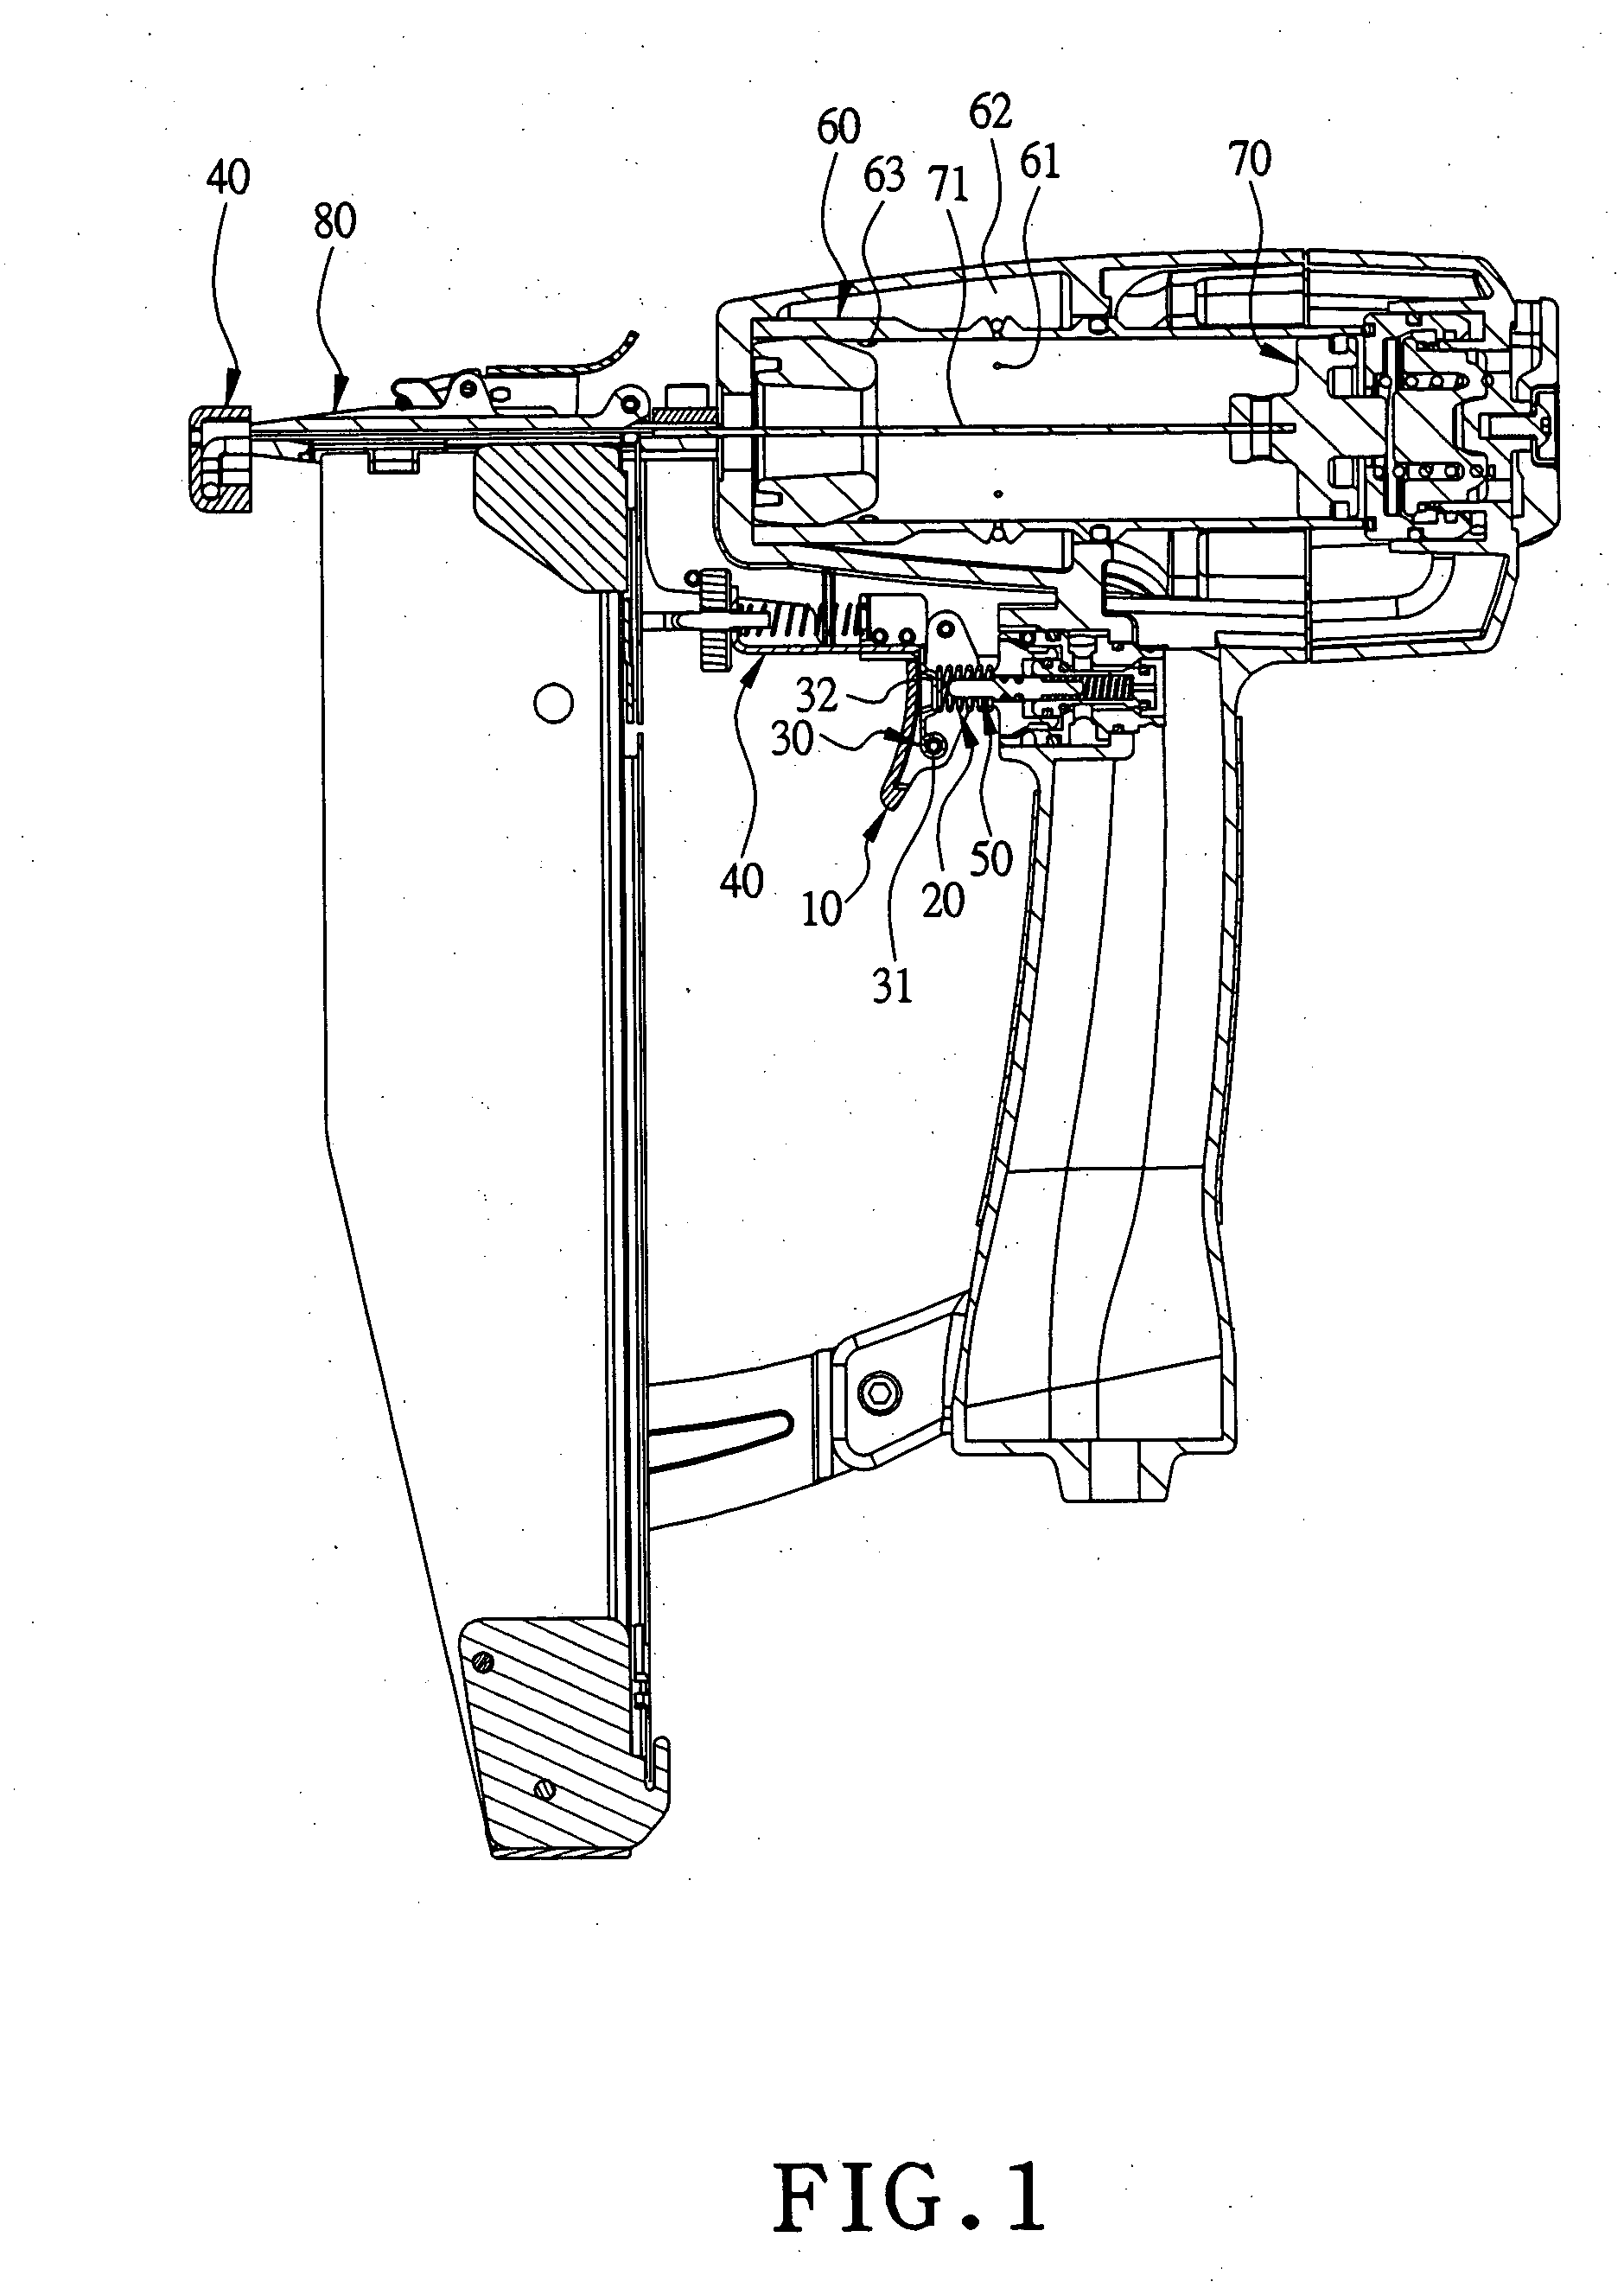 Single orderly striking device for a nail gun